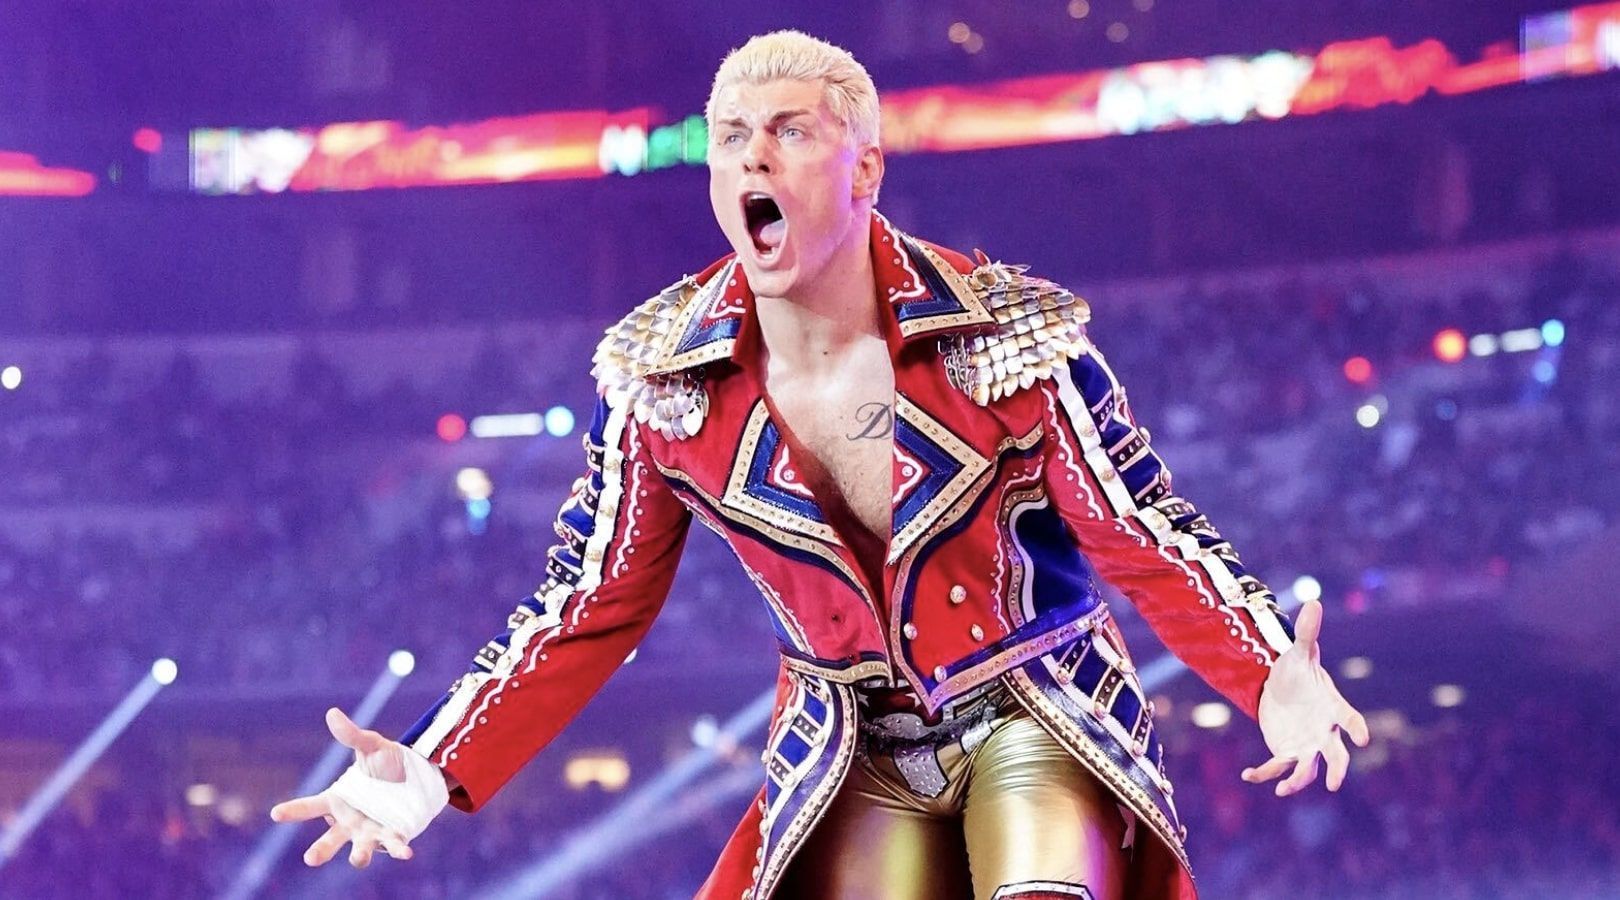 Cody Rhodes is nearing his WWE return